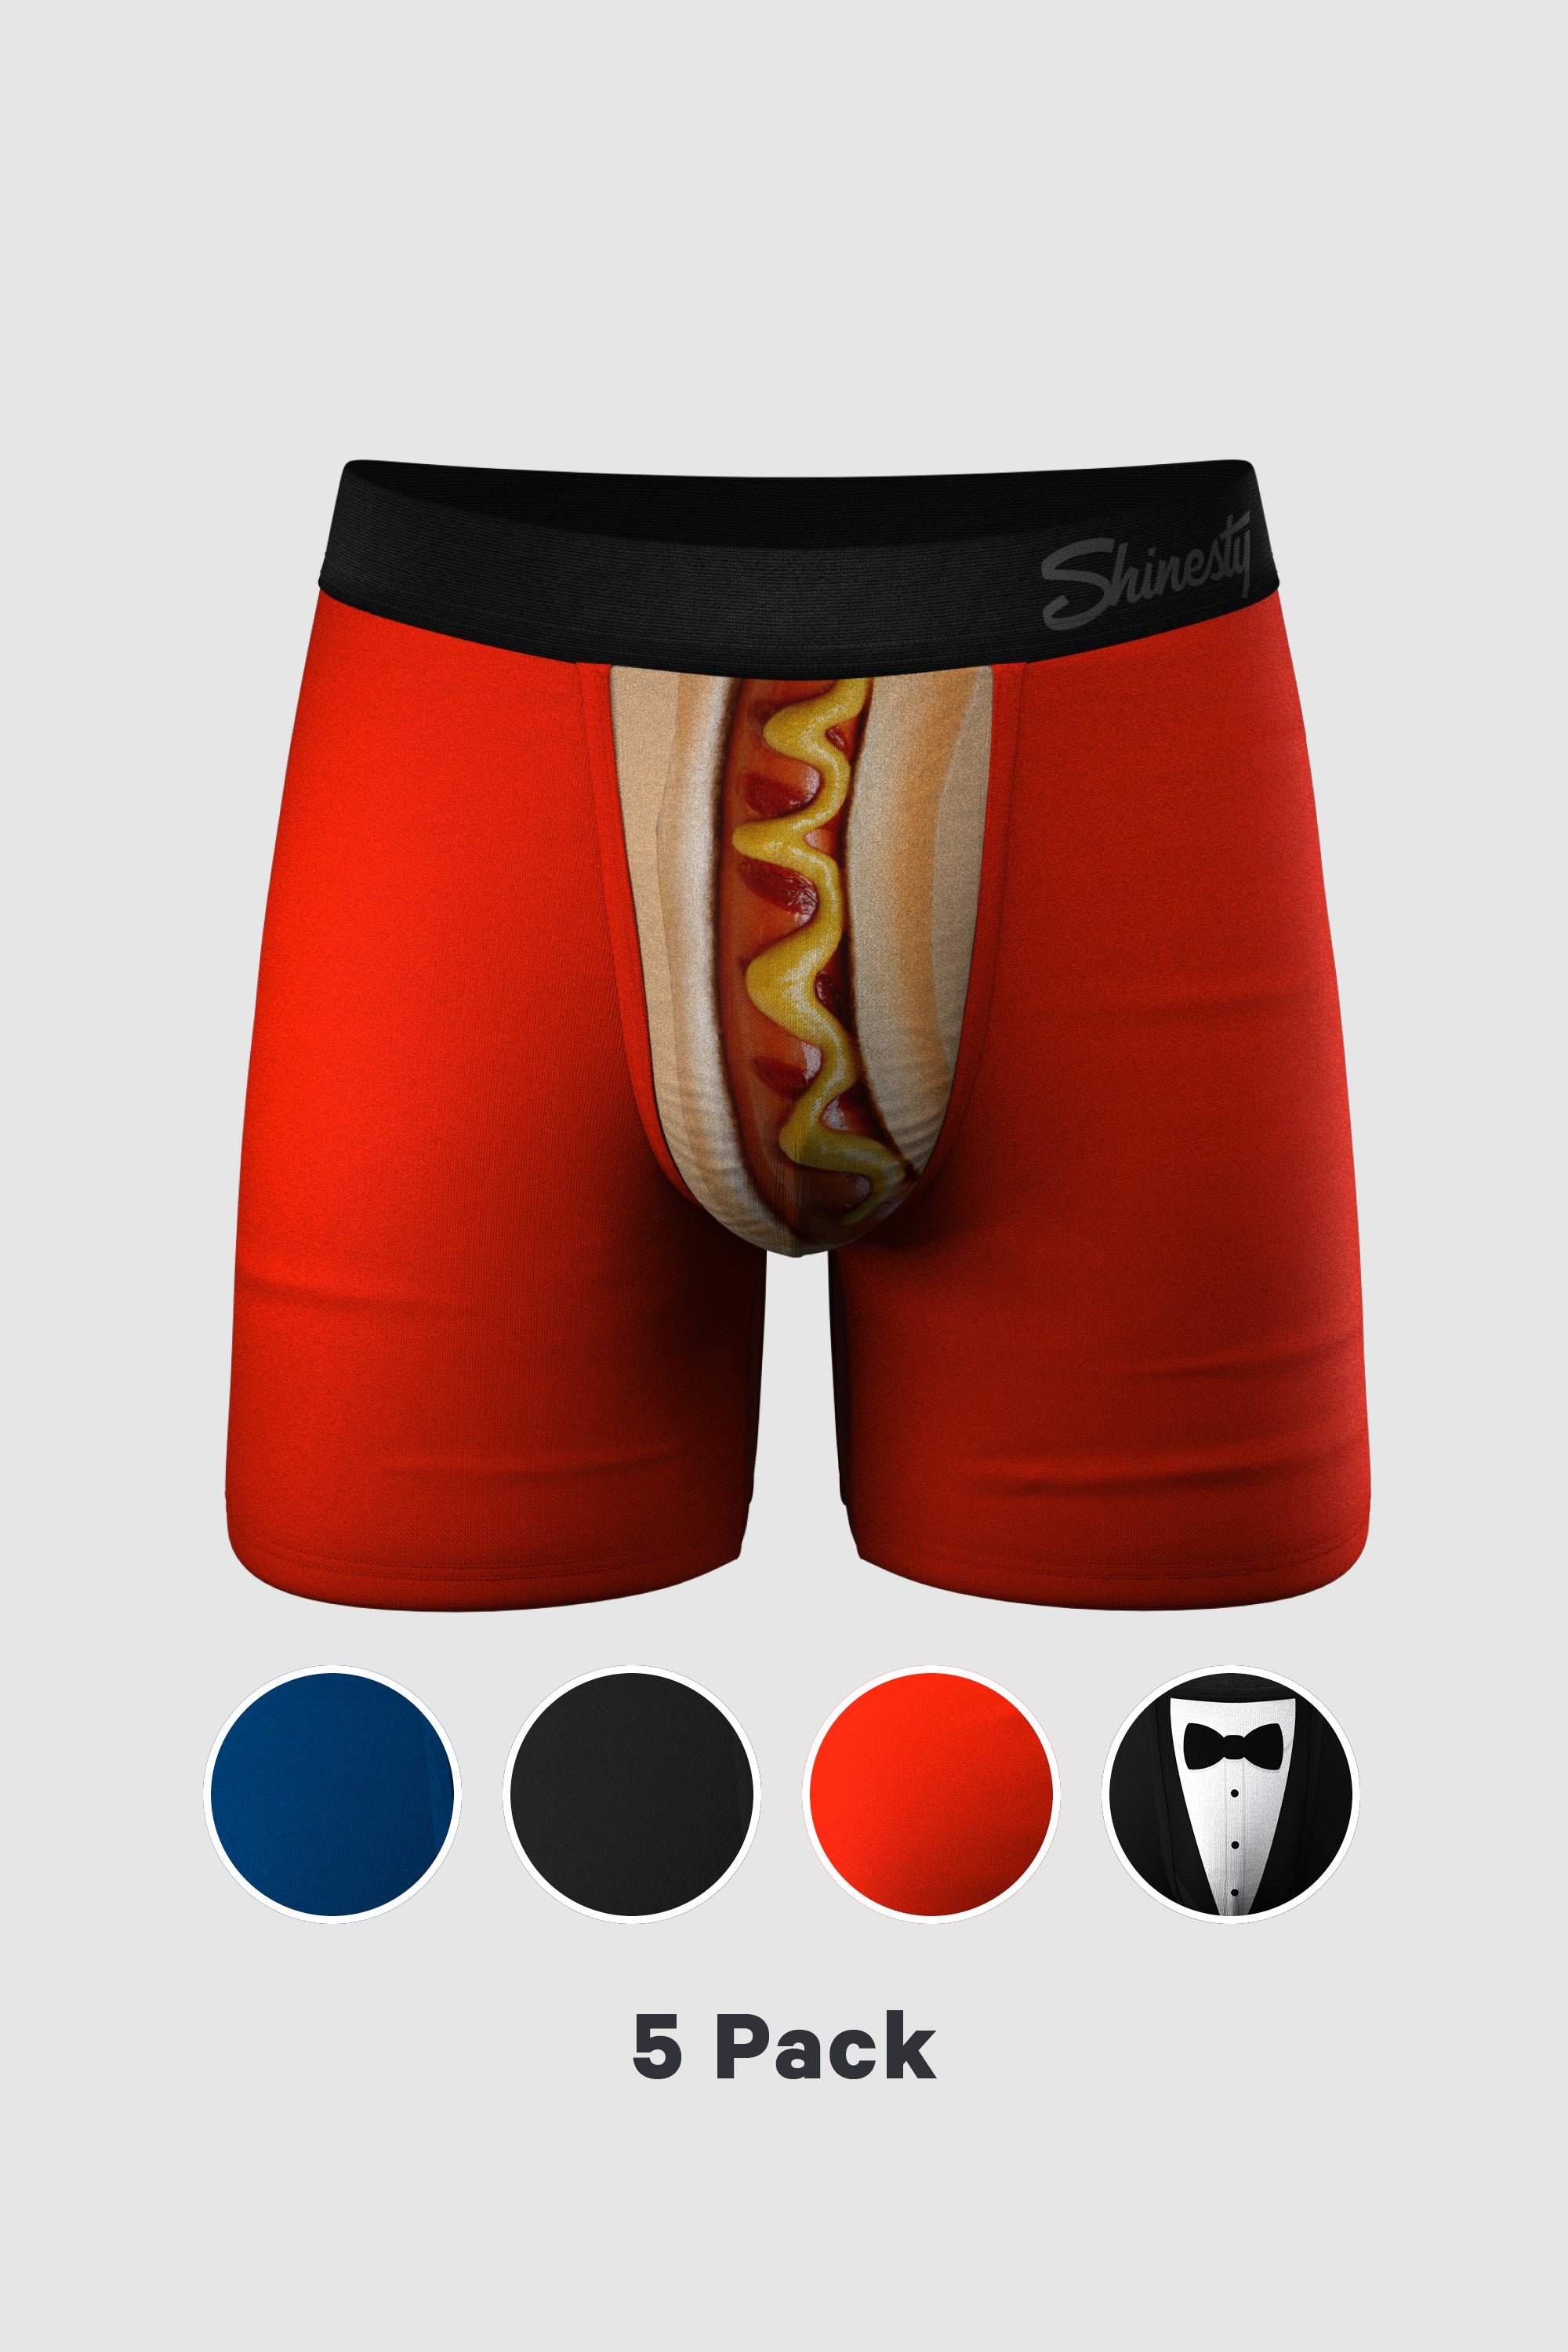 The Coney Islands - Shinesty Hot Dog Ball Hammock Pouch Underwear